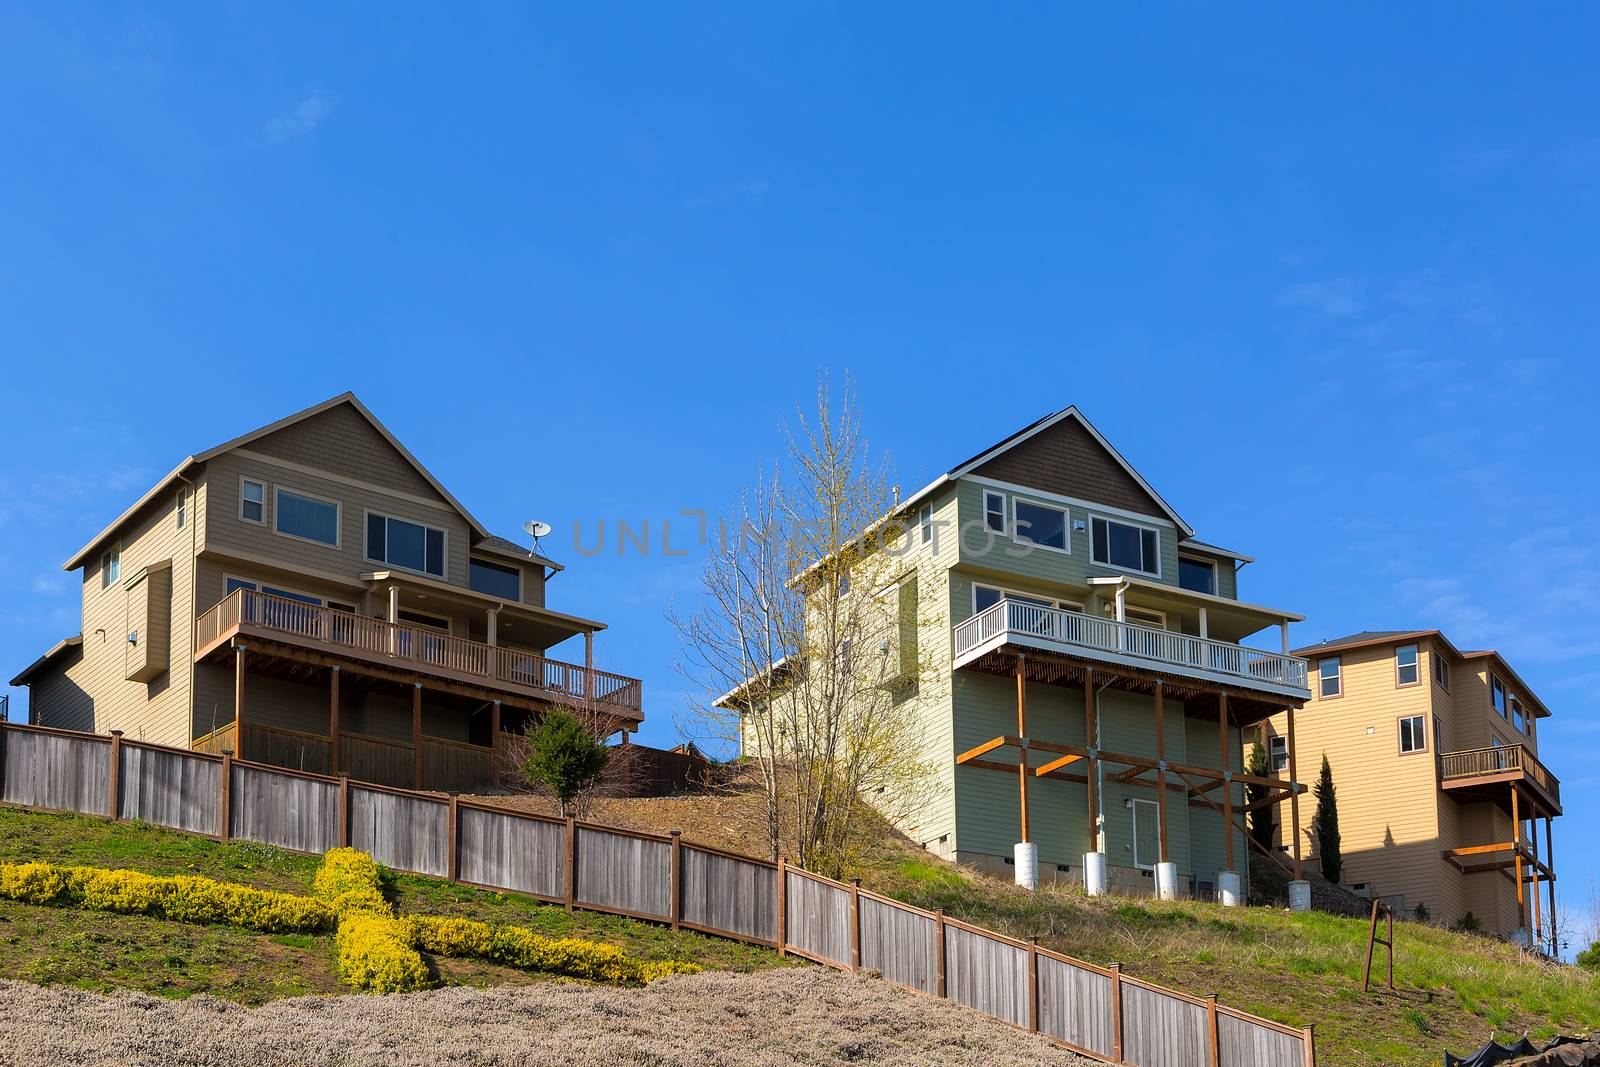 Homes on Stilts along Hillside Lots by jpldesigns